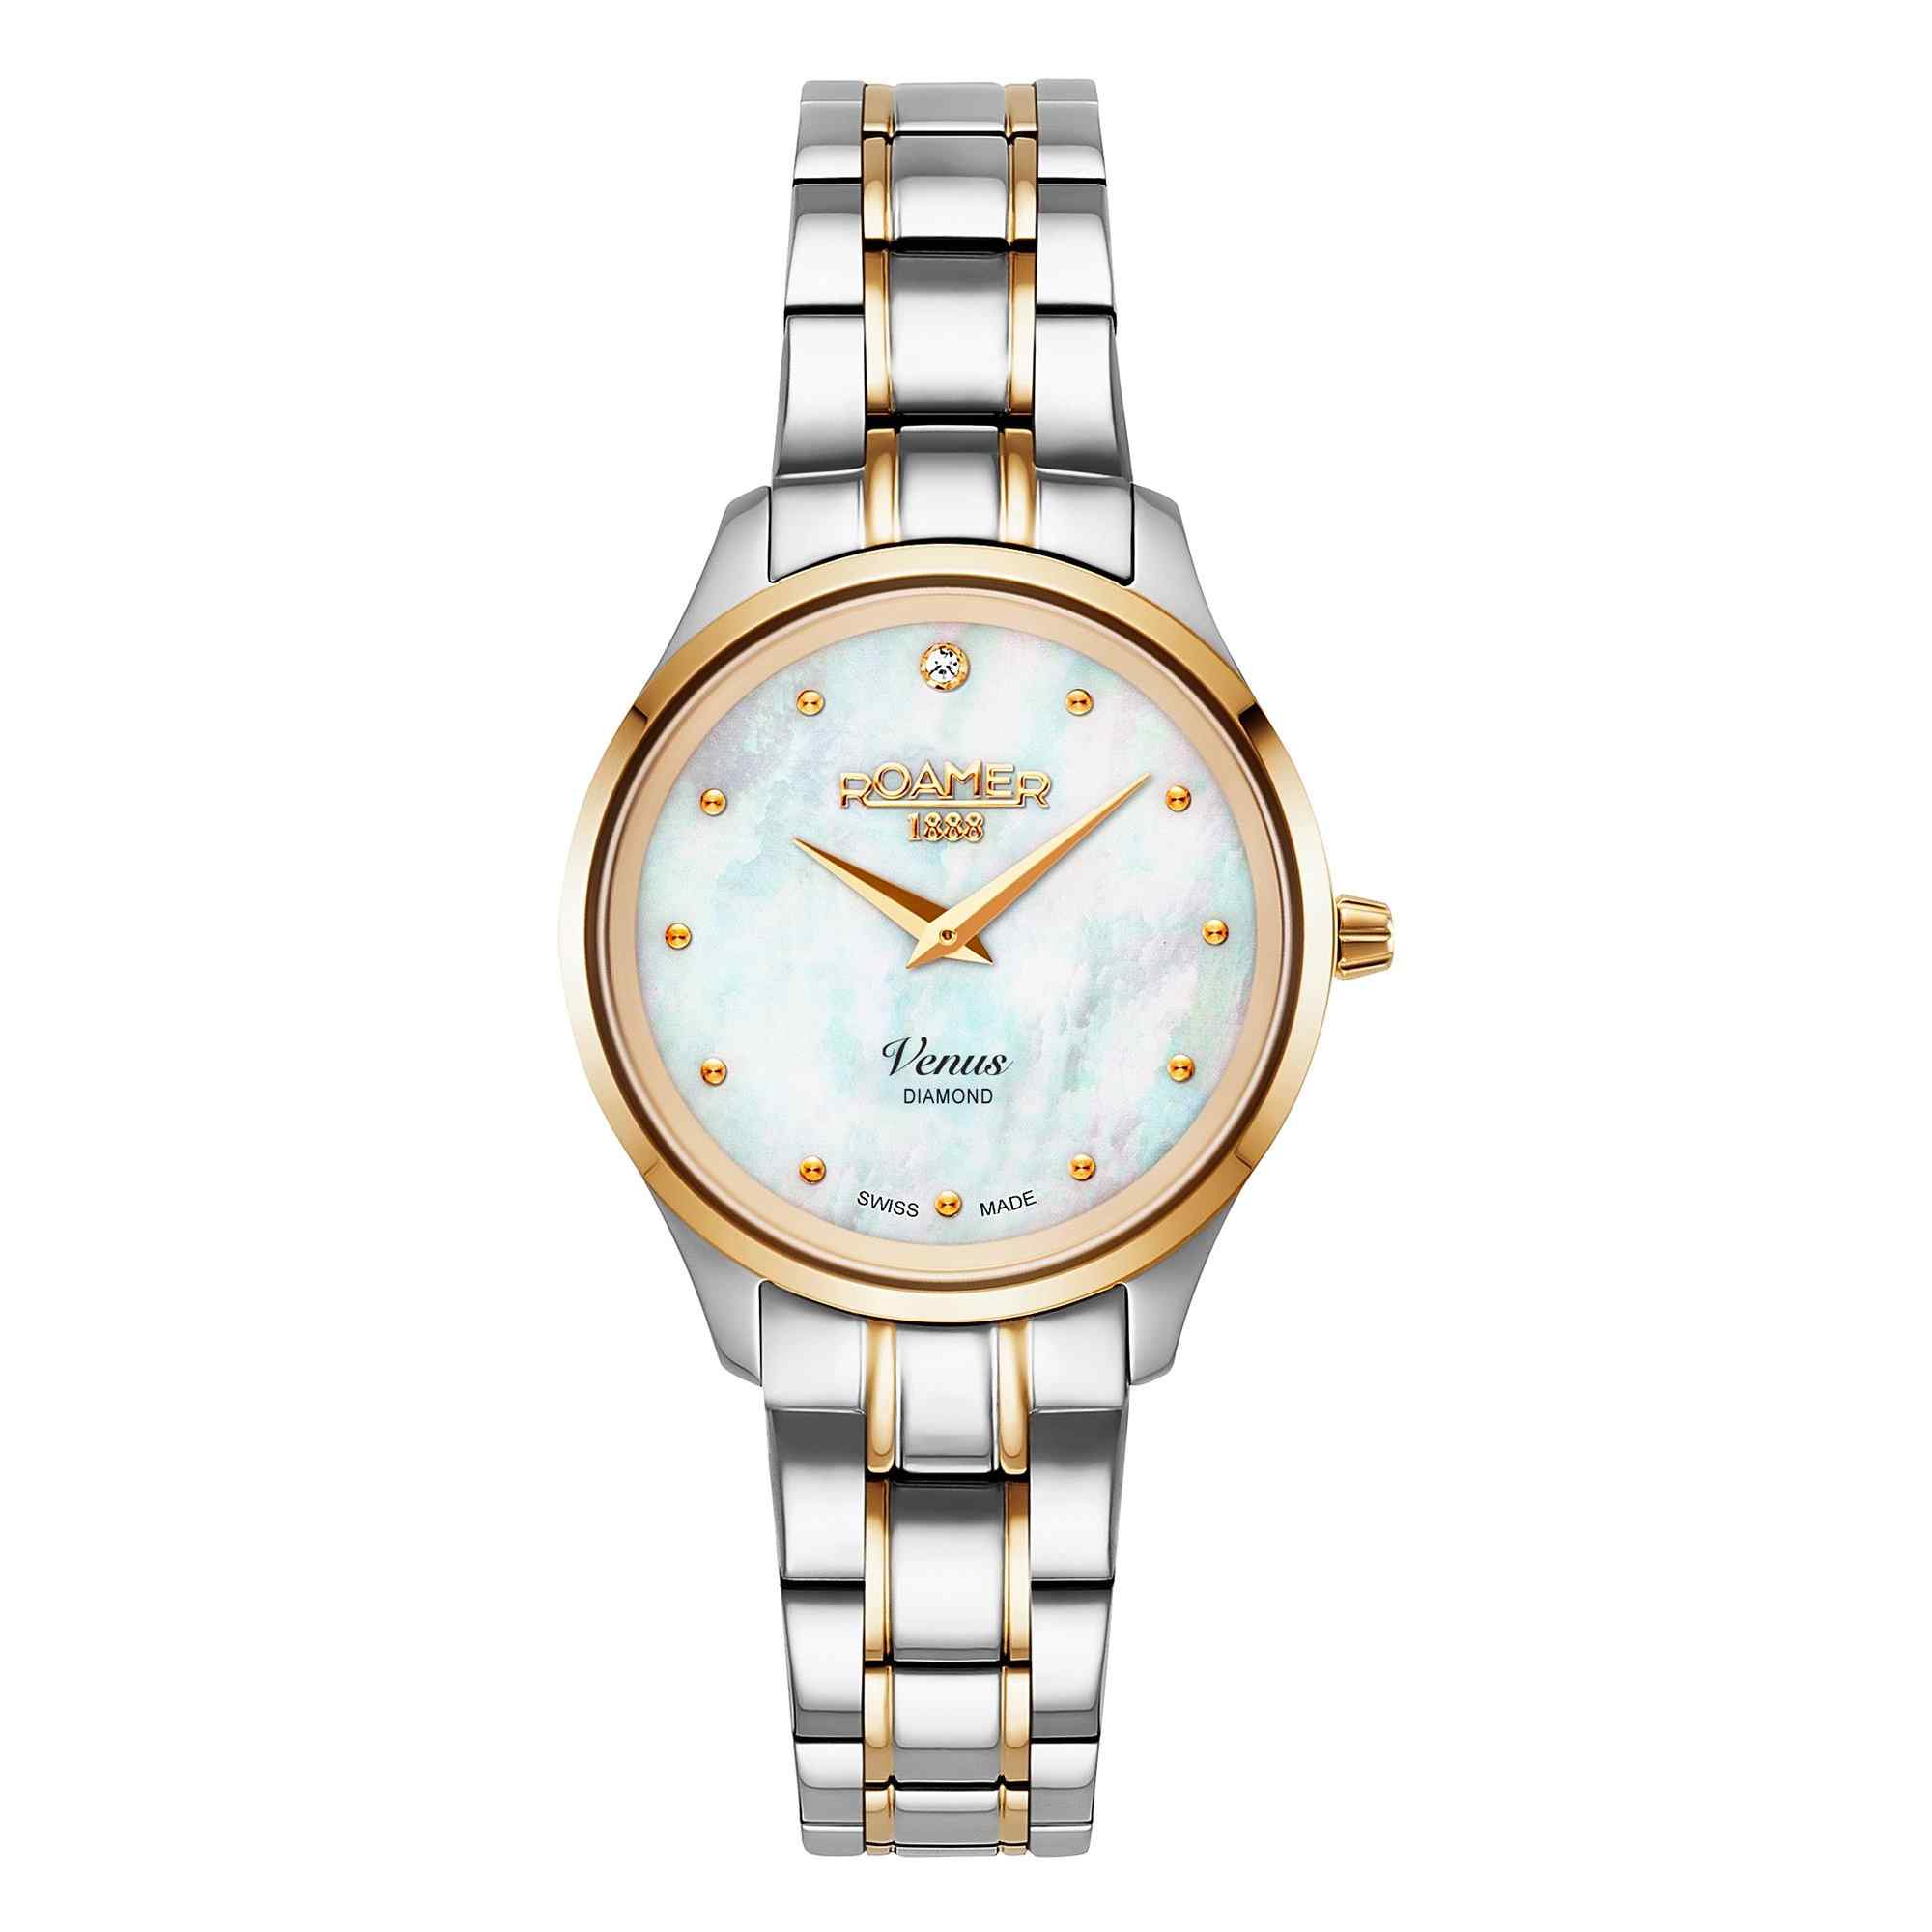 Photos - Wrist Watch Roamer 601857 47 89 20 Women's Venus Diamond Wristwatch 